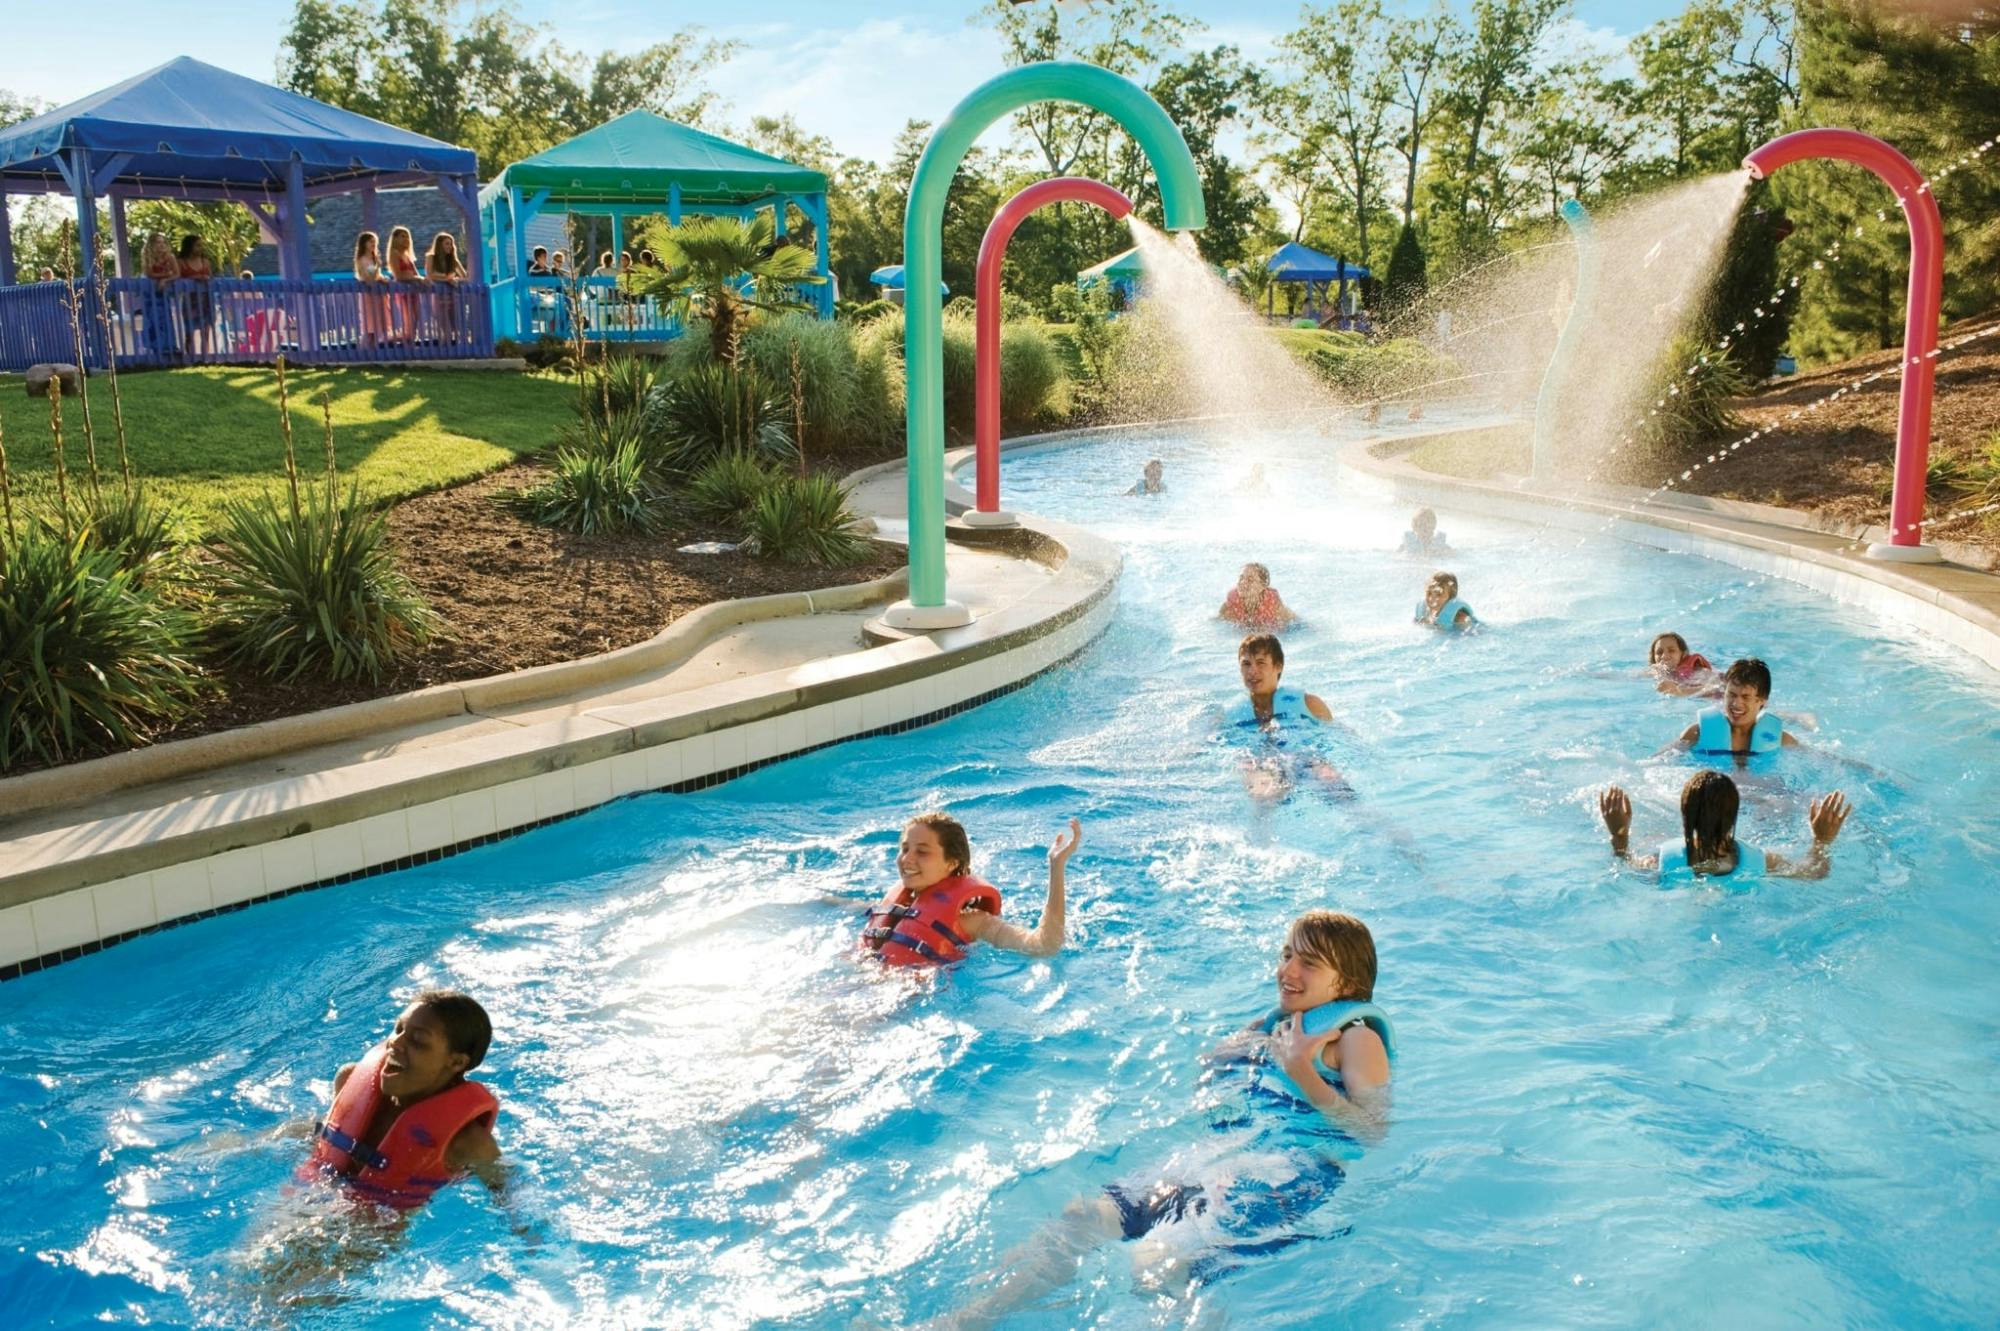 Billets 2 jours pour Busch Gardens Williamsburg et Water Country USA